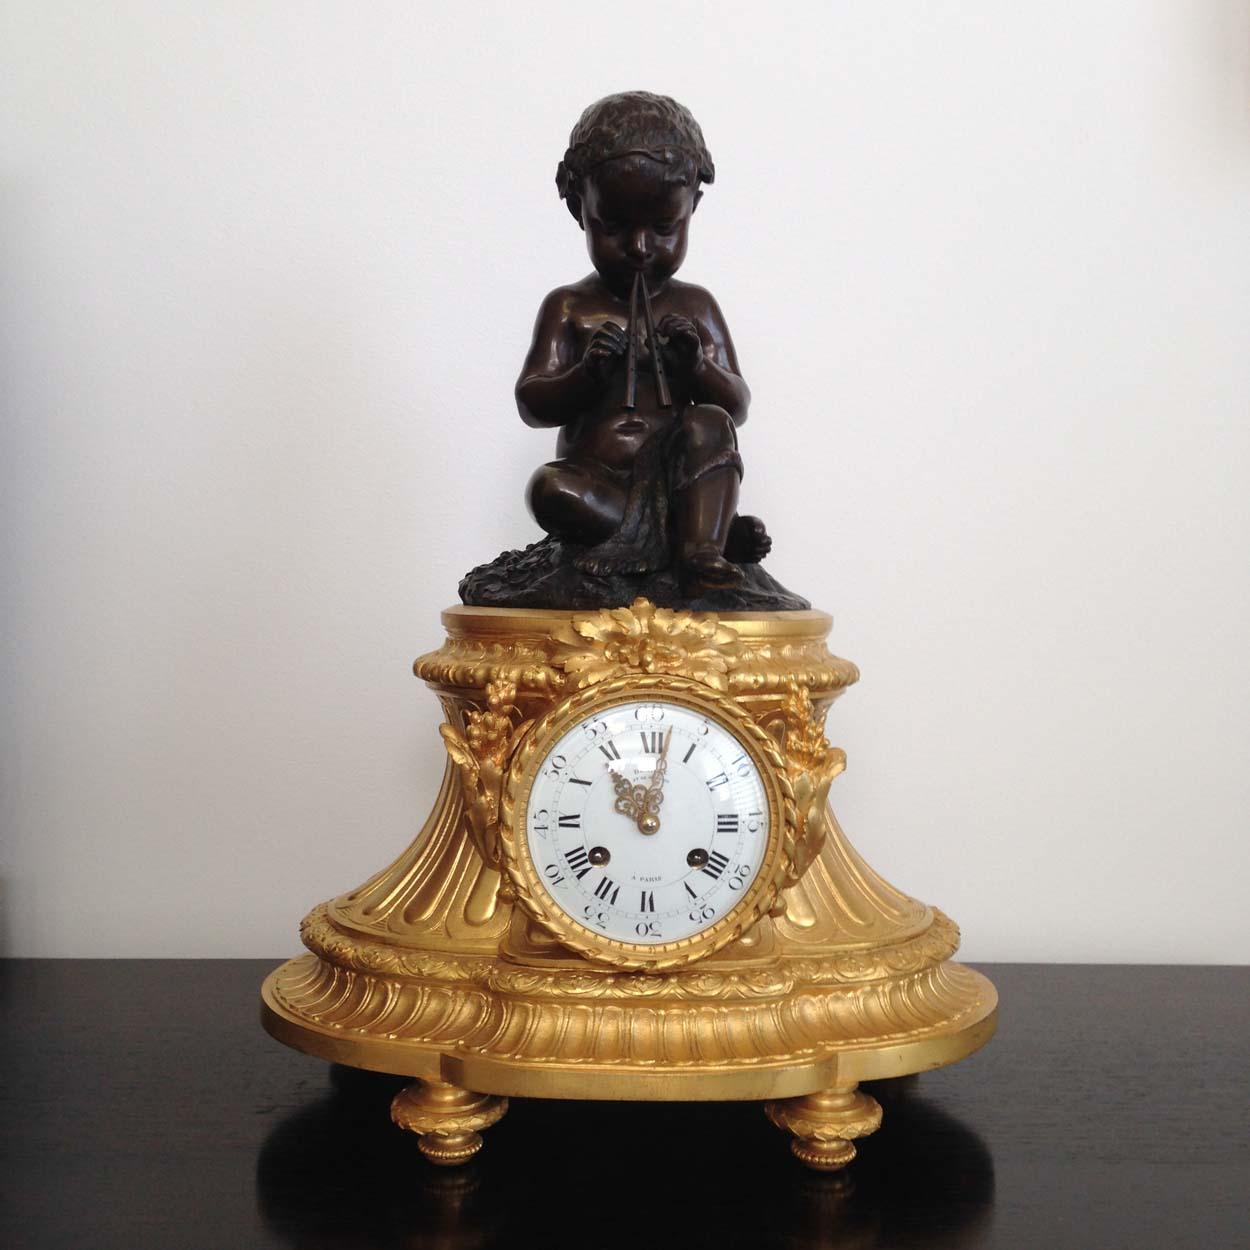 Louis XVI 19th Century French Ormolu and Bronze Mantel Clock by Deniere, Paris